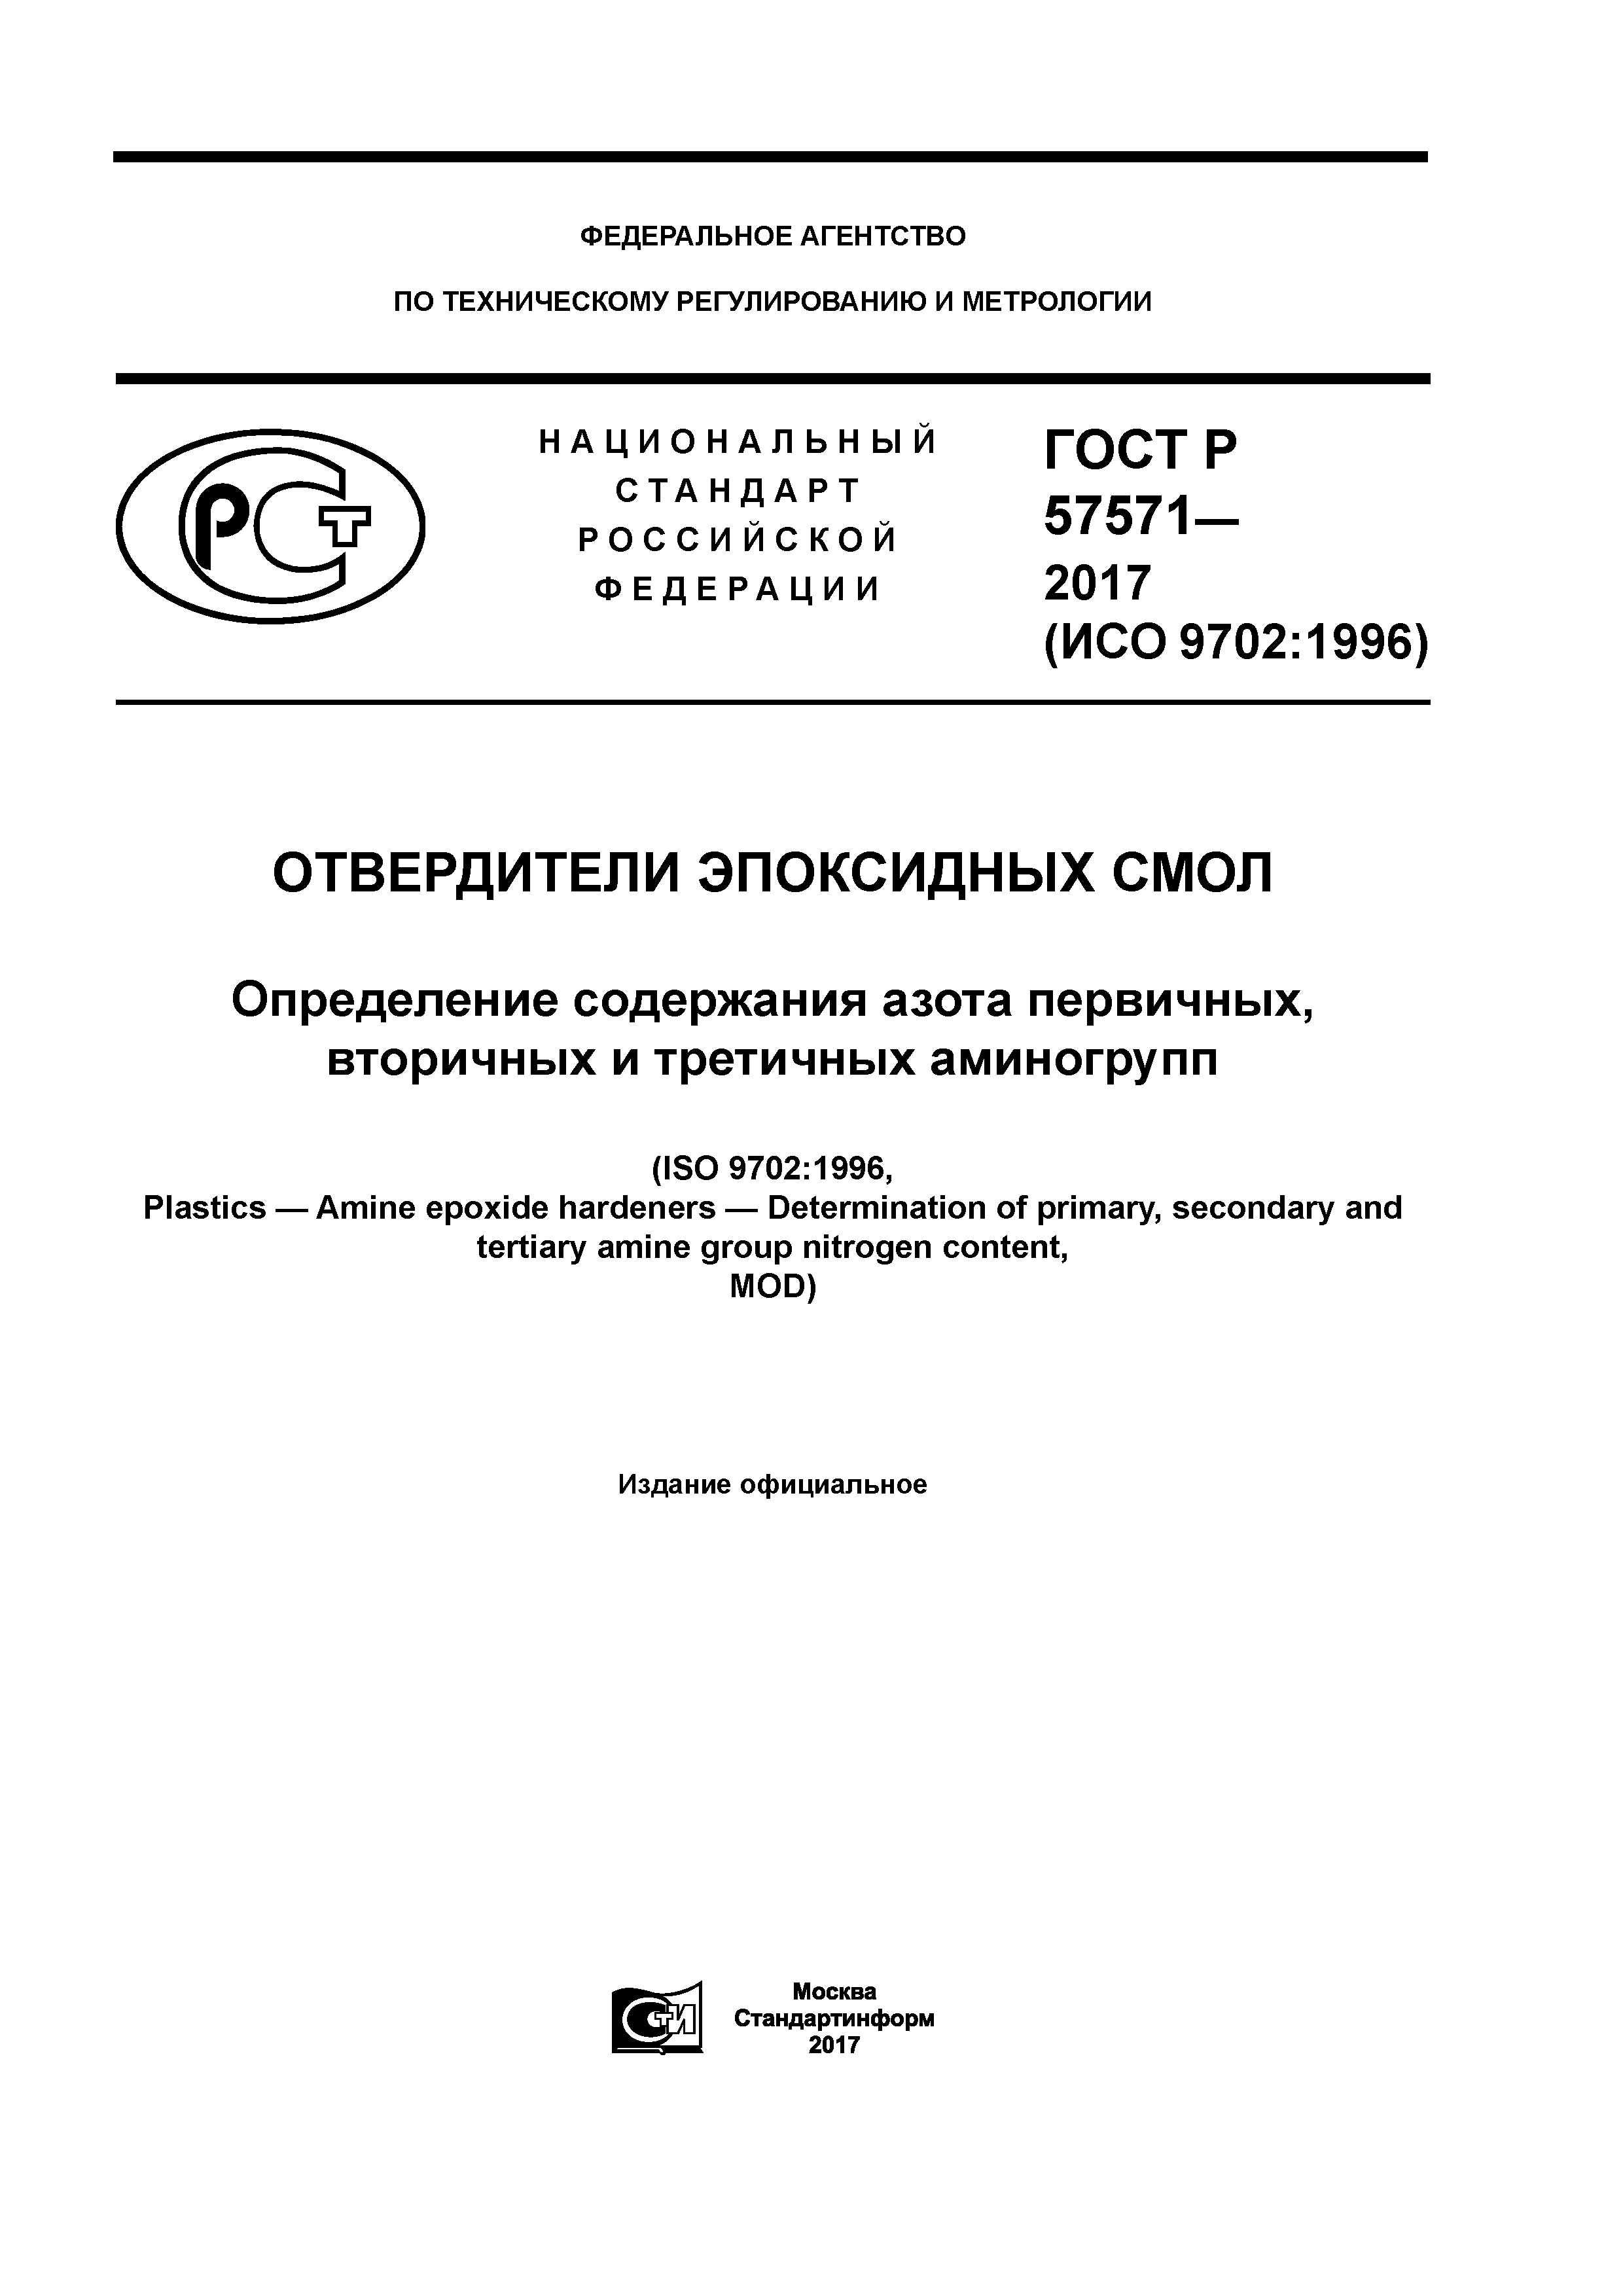 ГОСТ Р 57571-2017